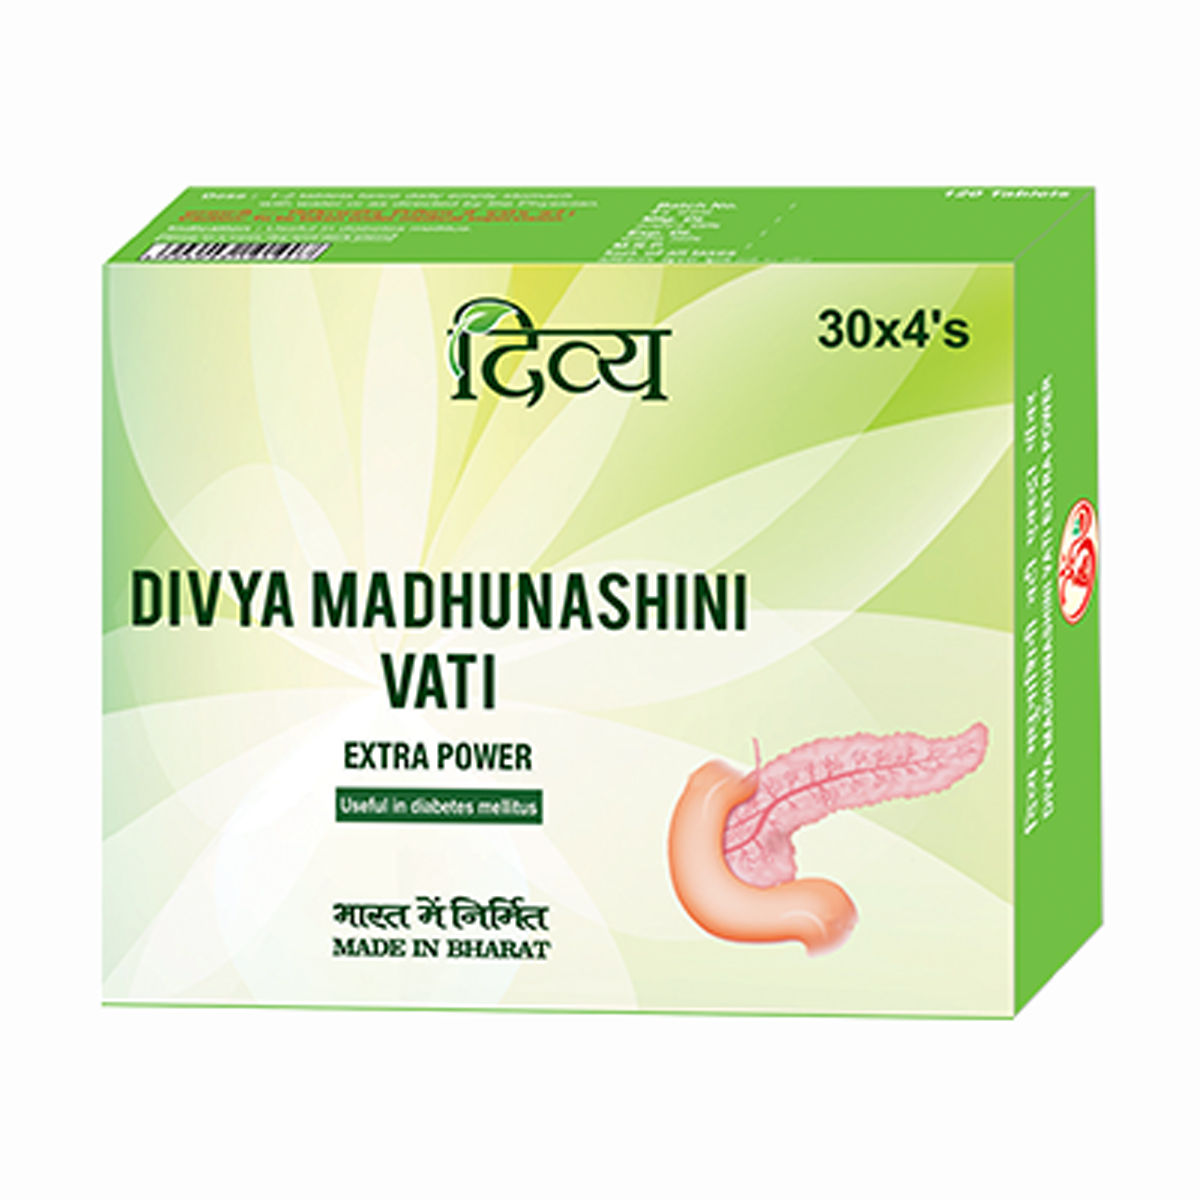 Patanjali Divya Madhunashini Vati Extra Power, 120 Tablets, Pack of 1 